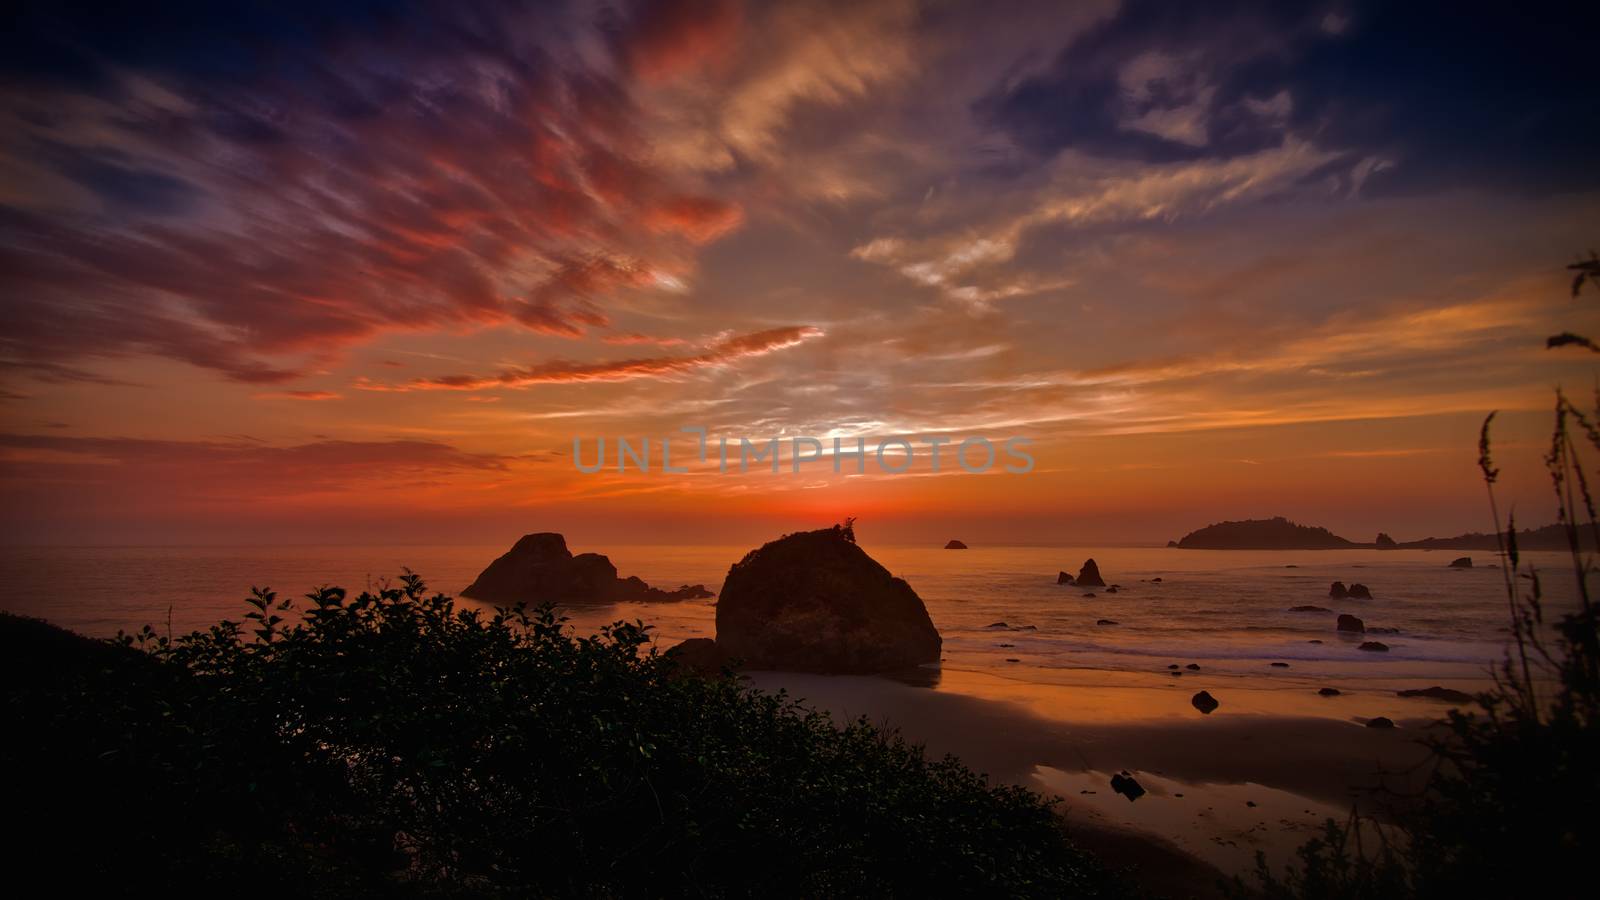 Sunset Over Trinidad, California by backyard_photography